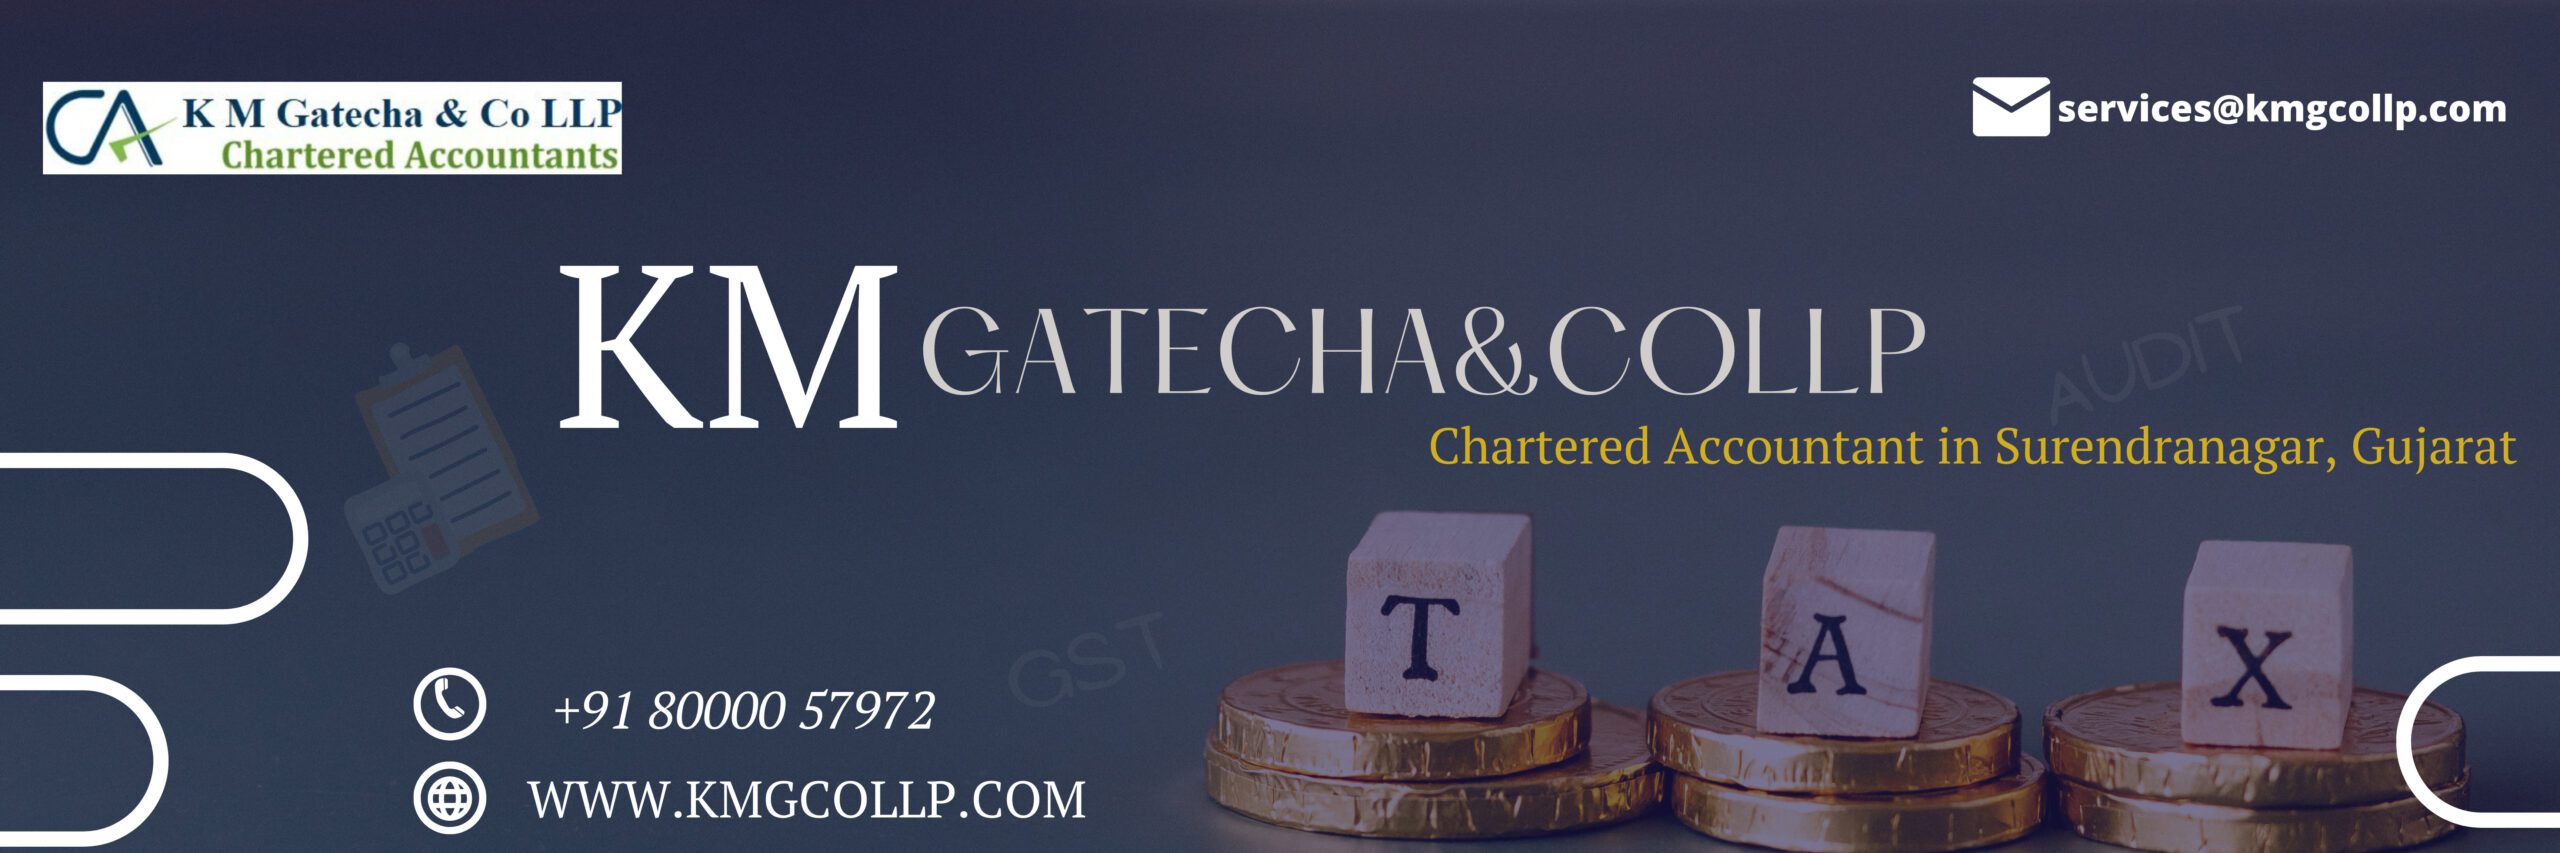 CA Chartered Accountant in Surendranagar, Gujarat